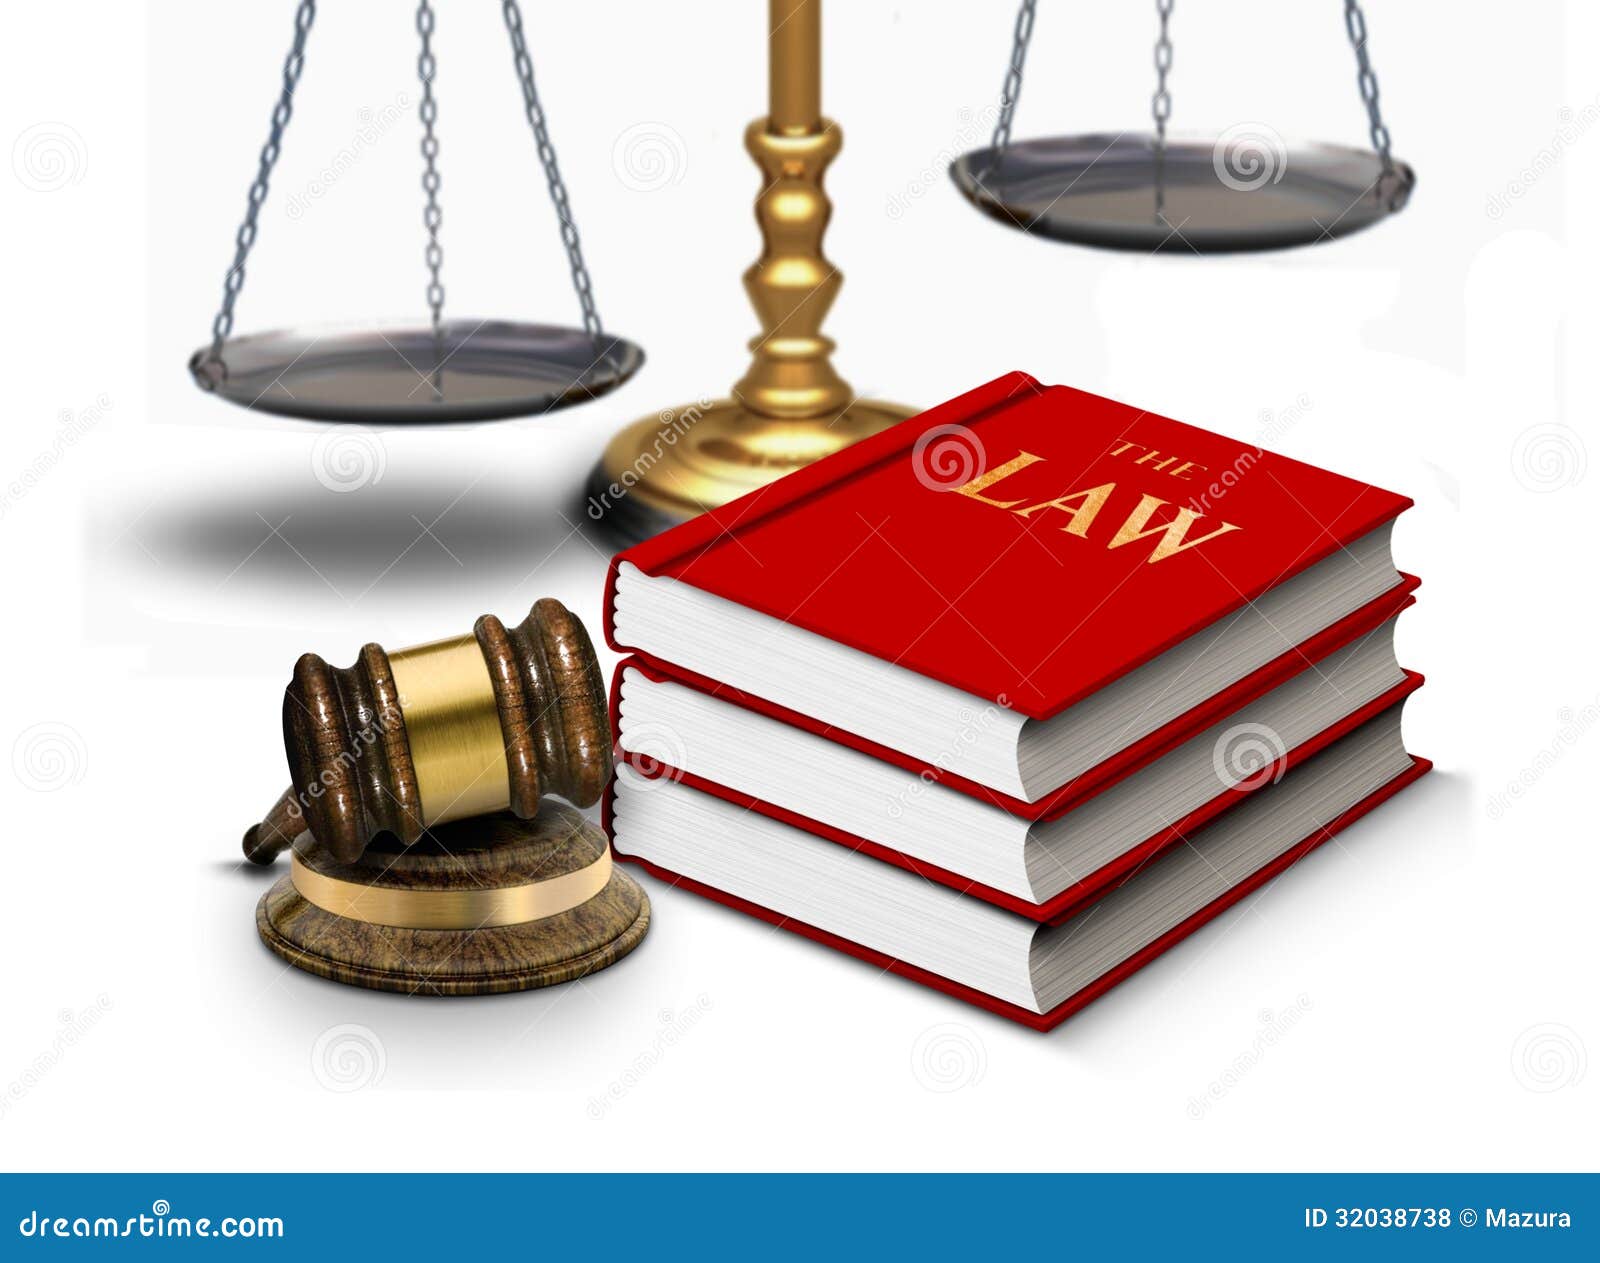 legal-gavel-scales-law-books-over-white-32038738.jpg